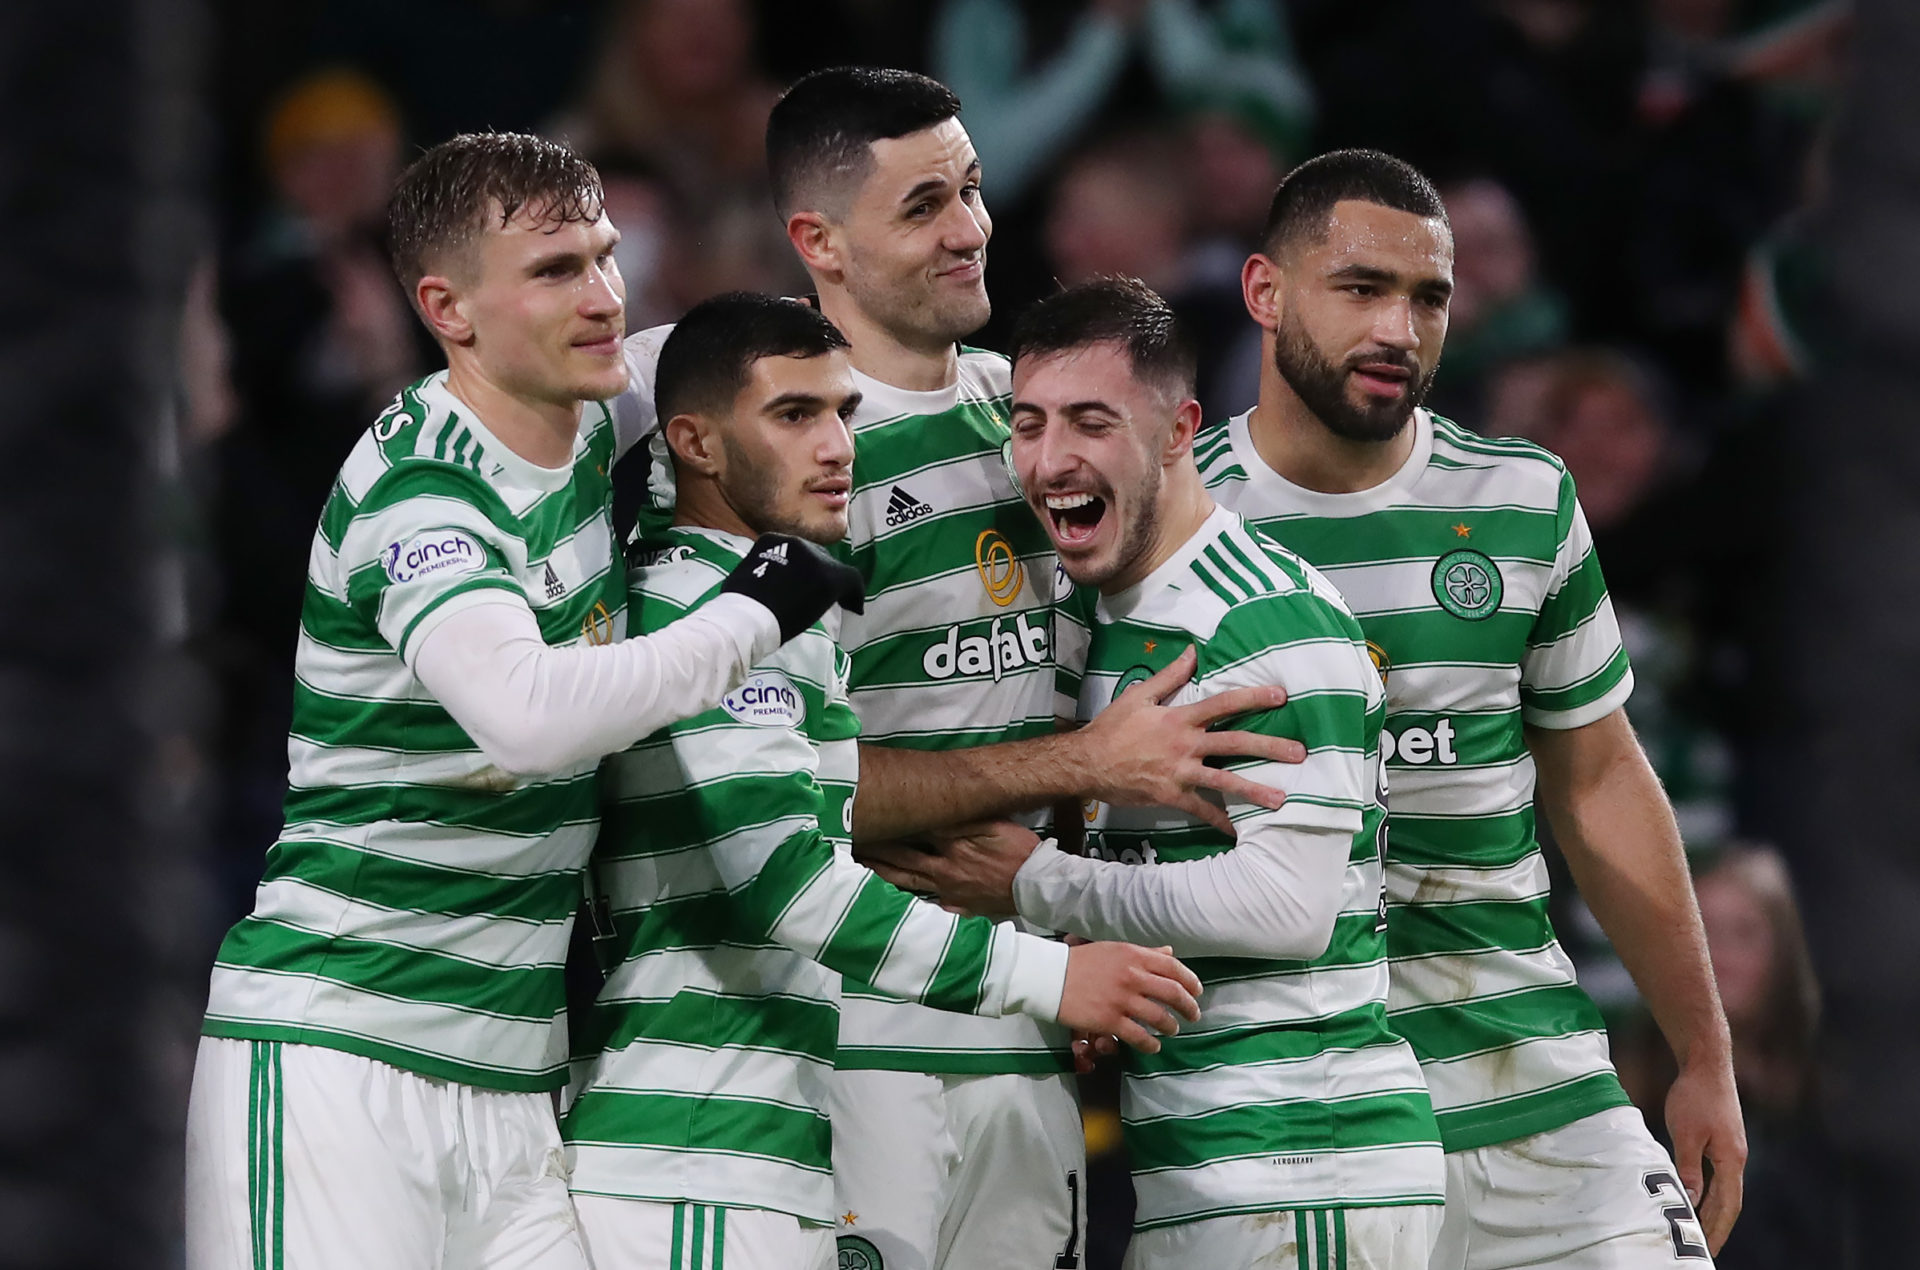 Celtic showed their mettle in December